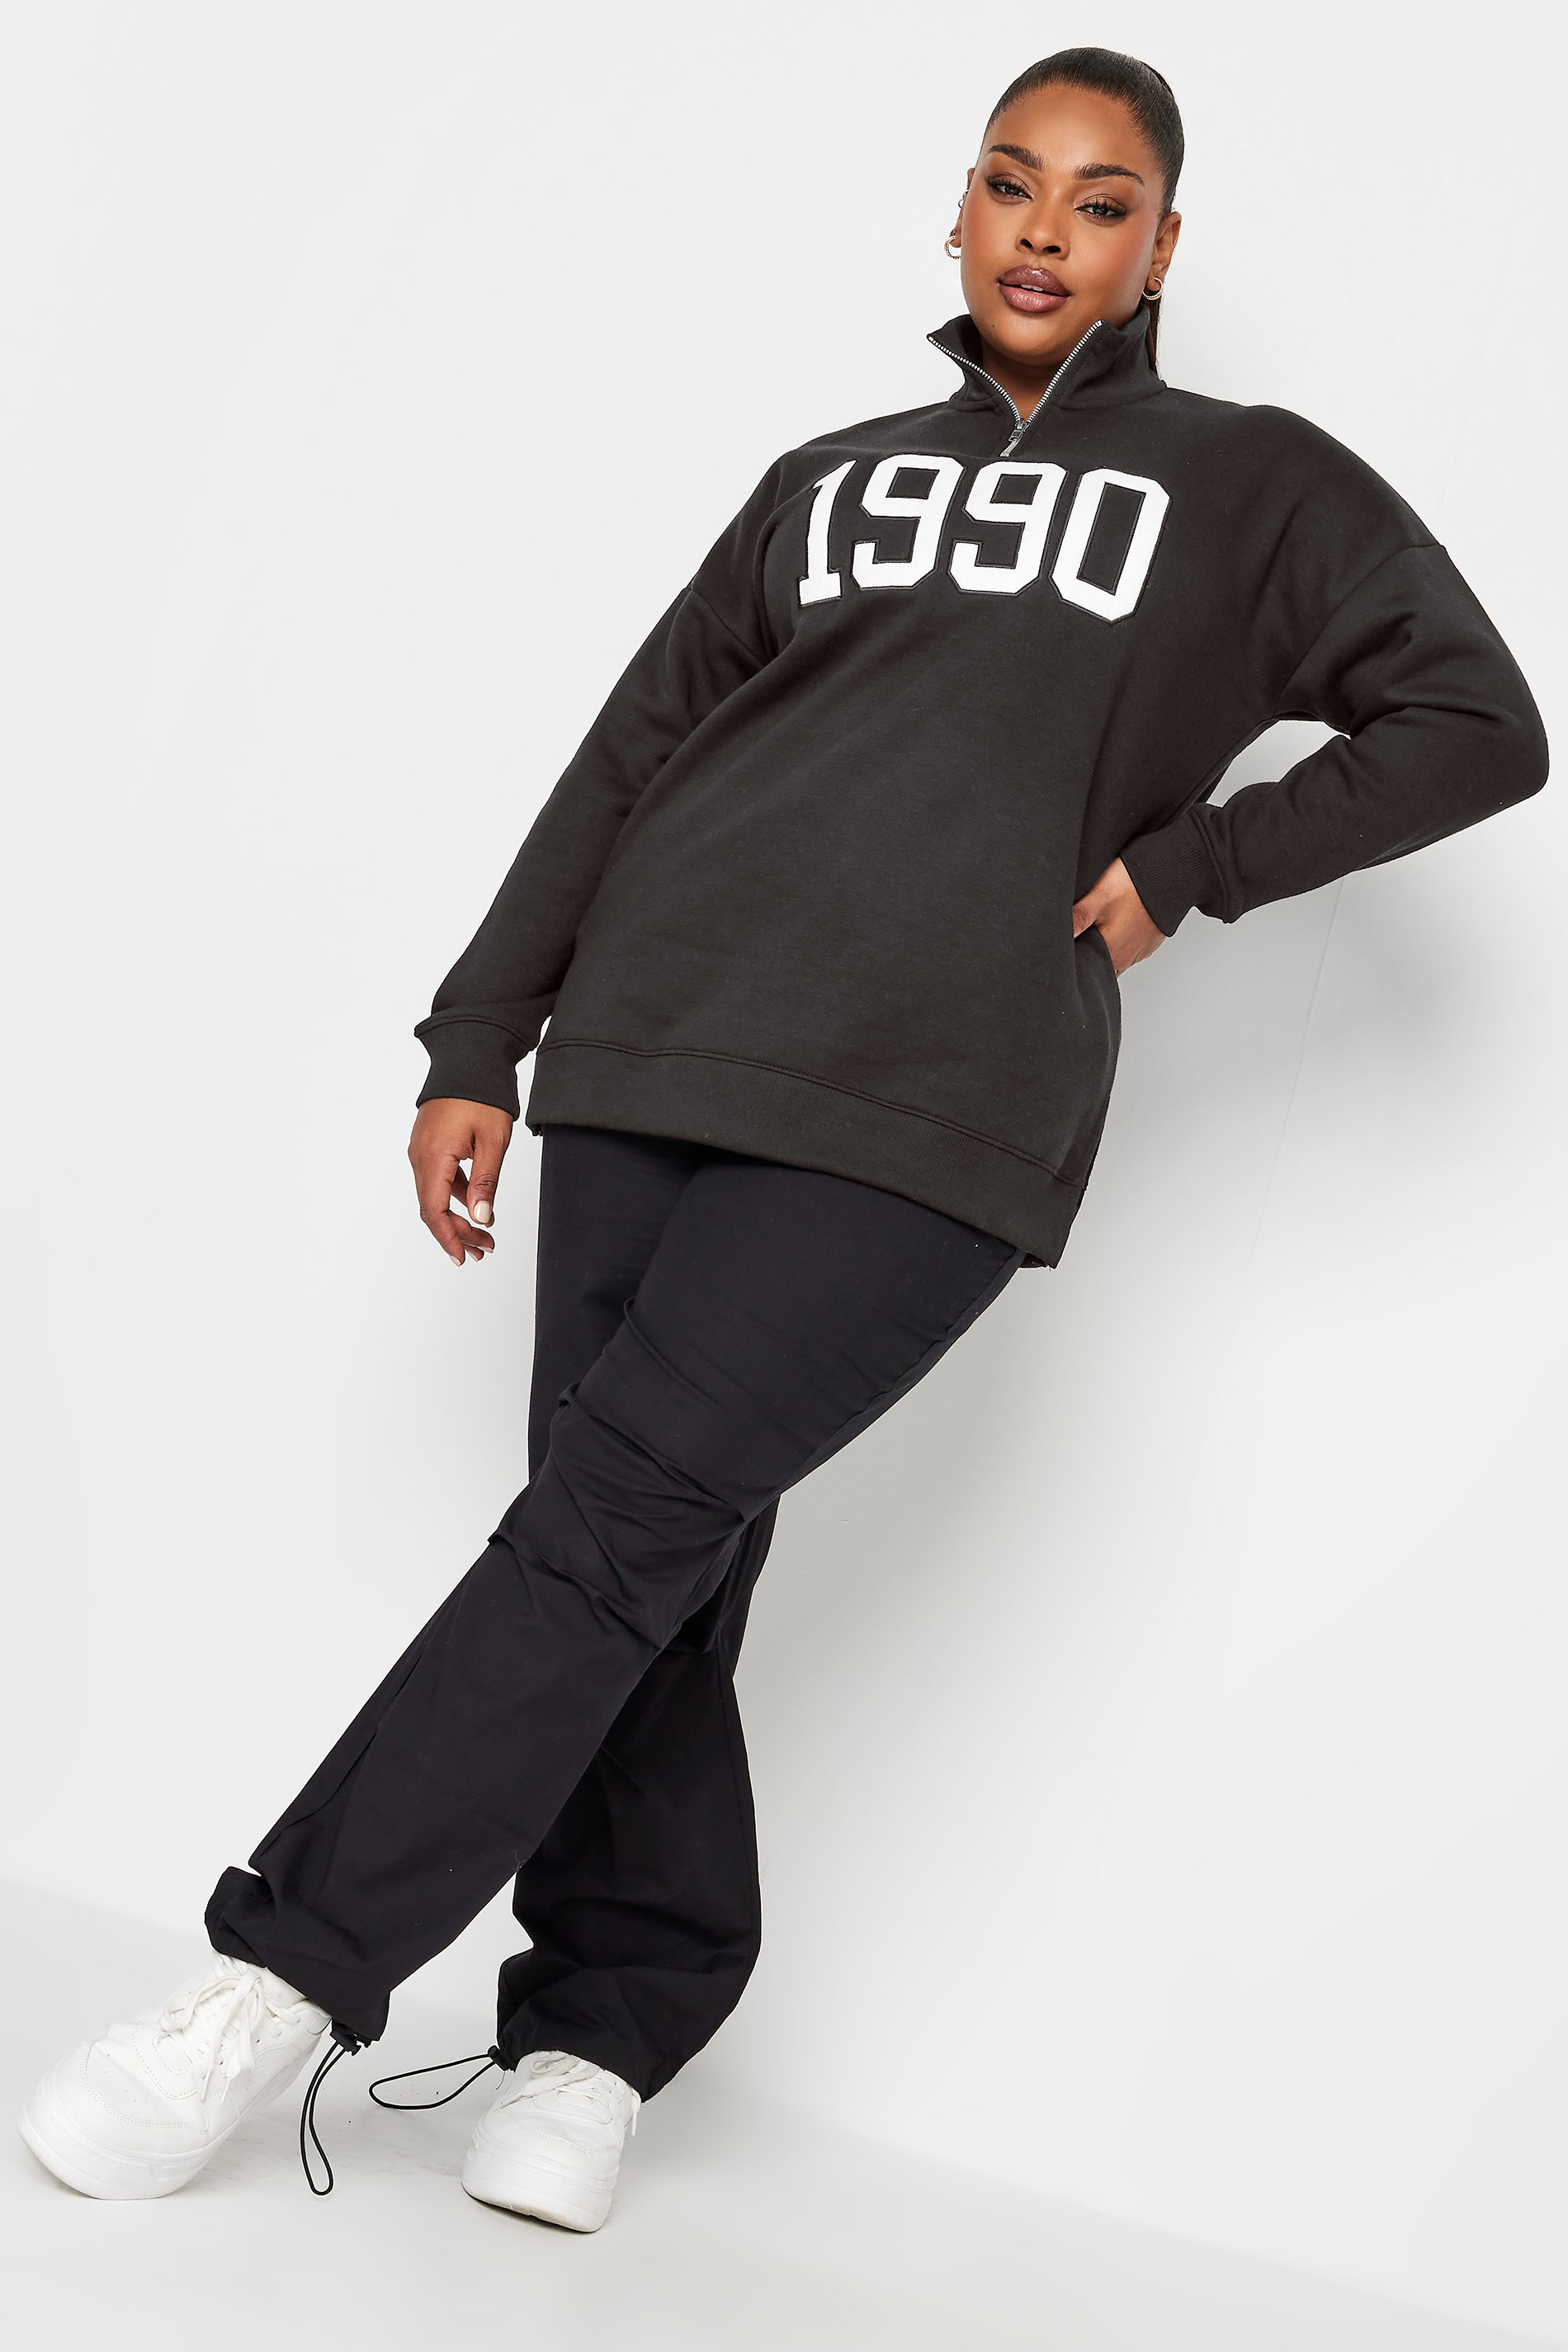 YOURS Plus Size Black '1990' Quarter Zip Sweatshirt | Yours Clothing 2